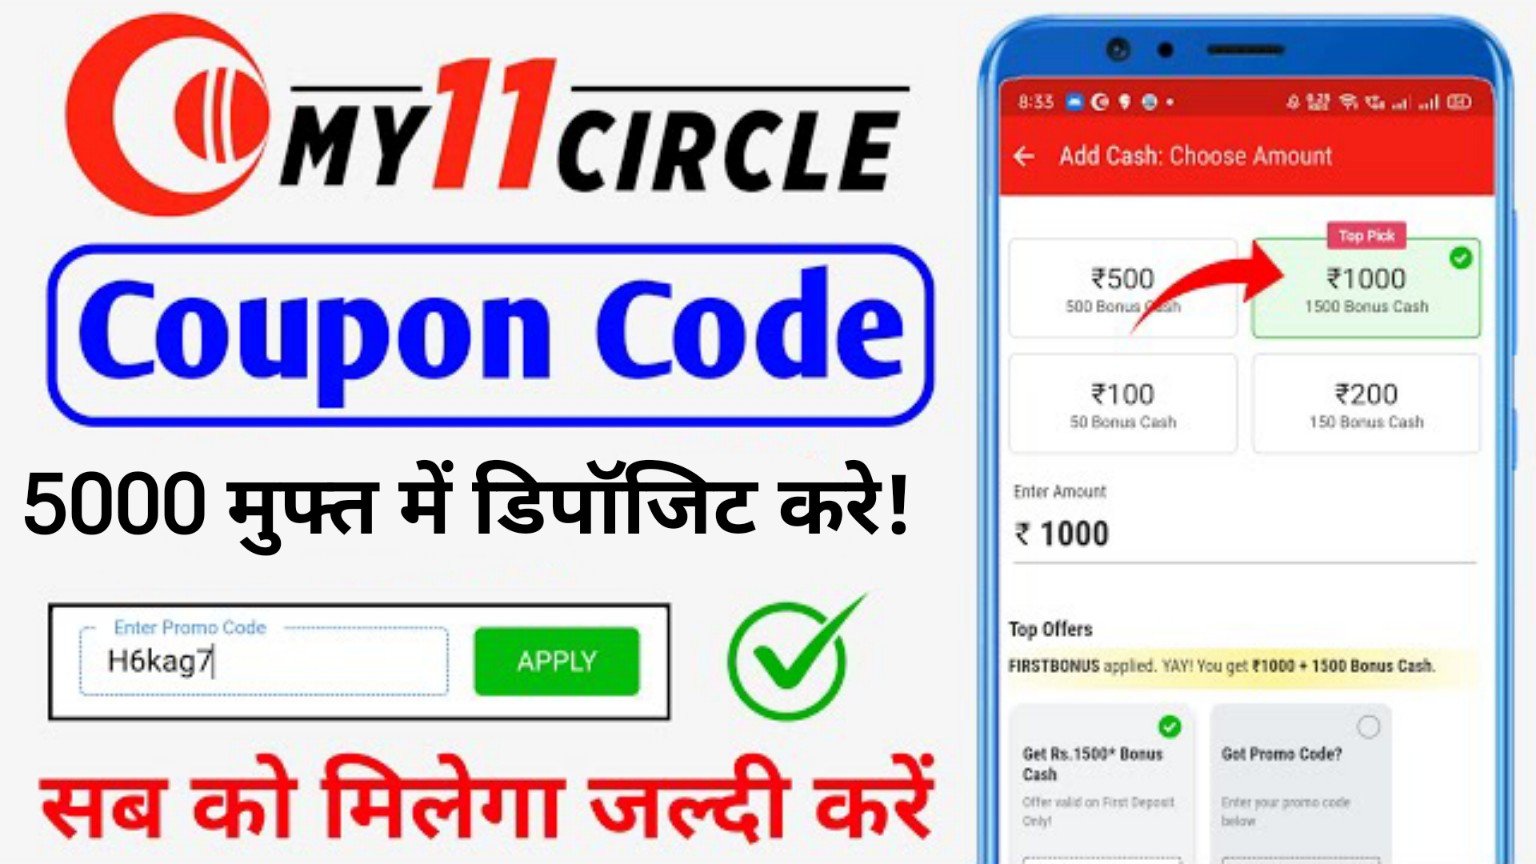 My11Circle Free ₹5,000 Coupon Code